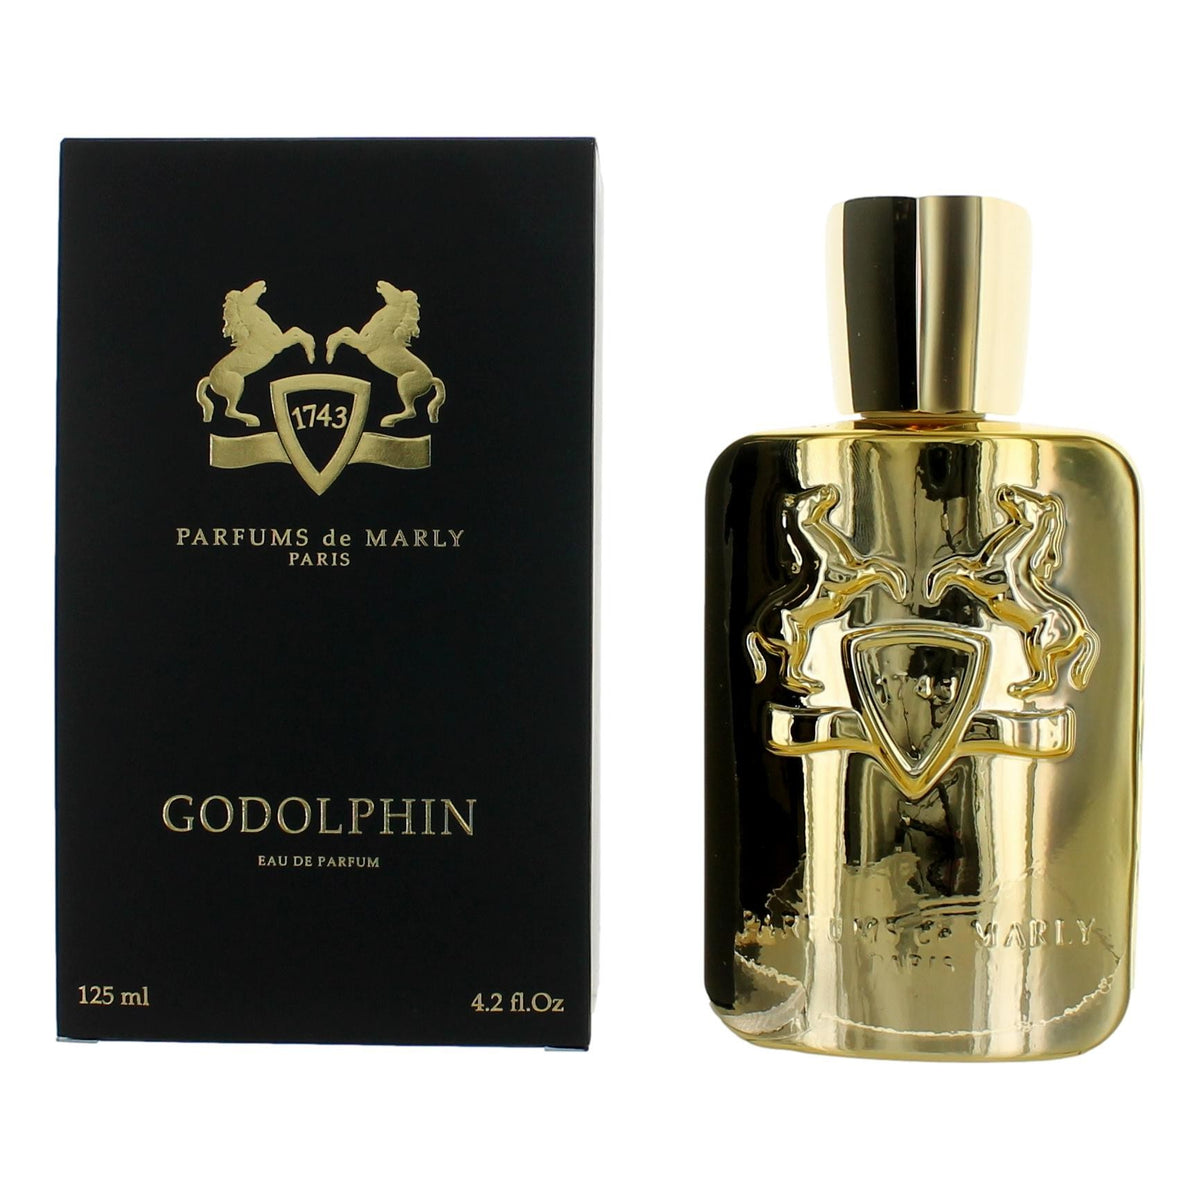 Parfums de Marly Godolphin by Parfums de Marly, 4.2 oz Eau De Parfum Spray for Men